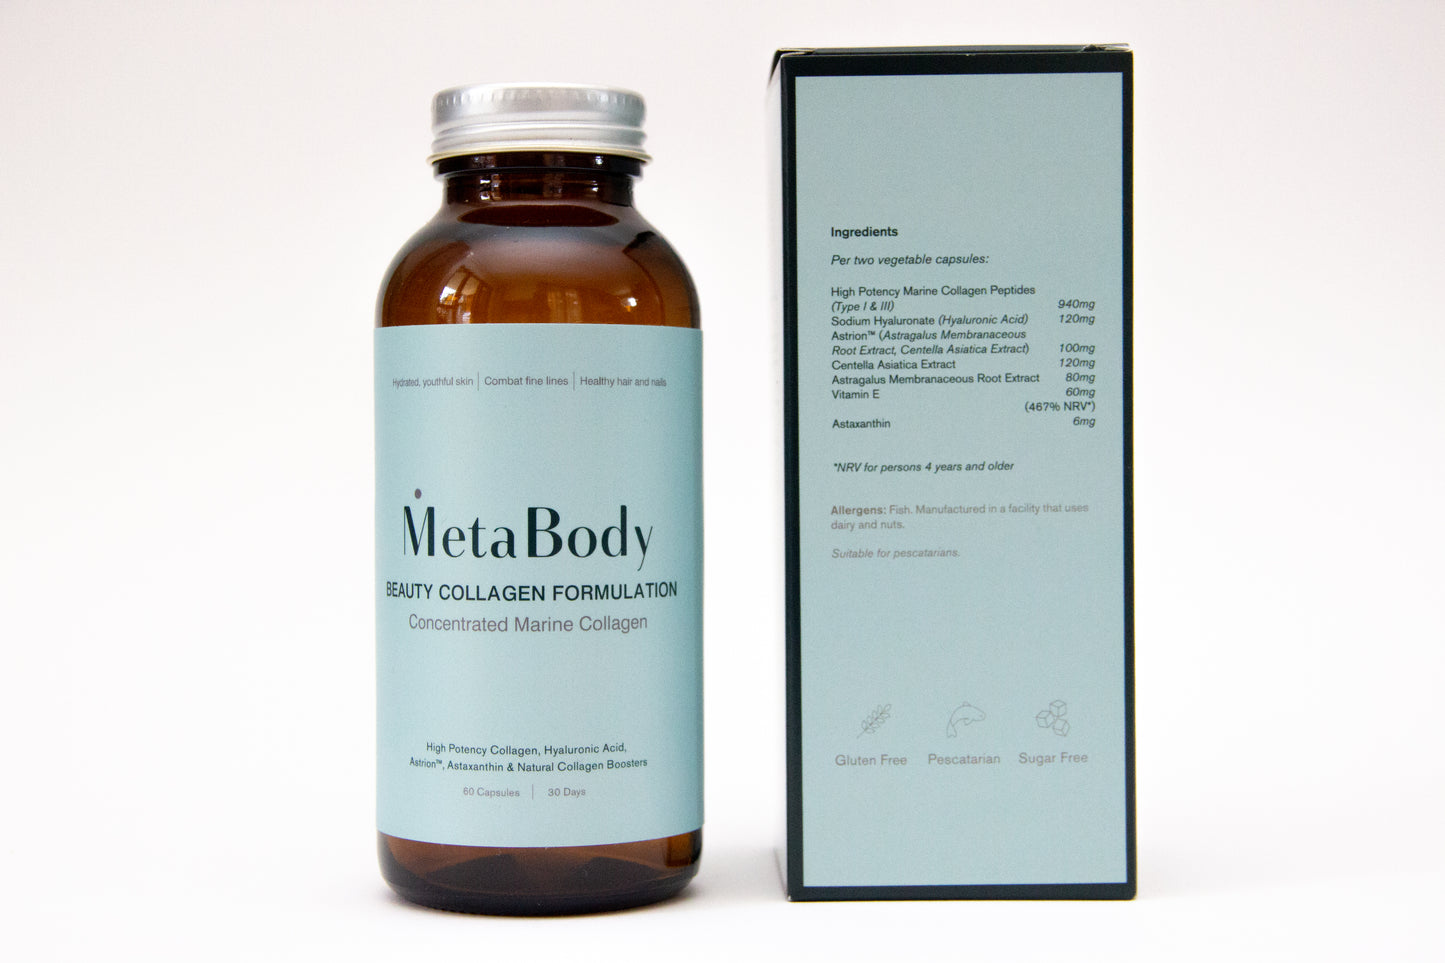 MetaBody Beauty Collagen Formulation